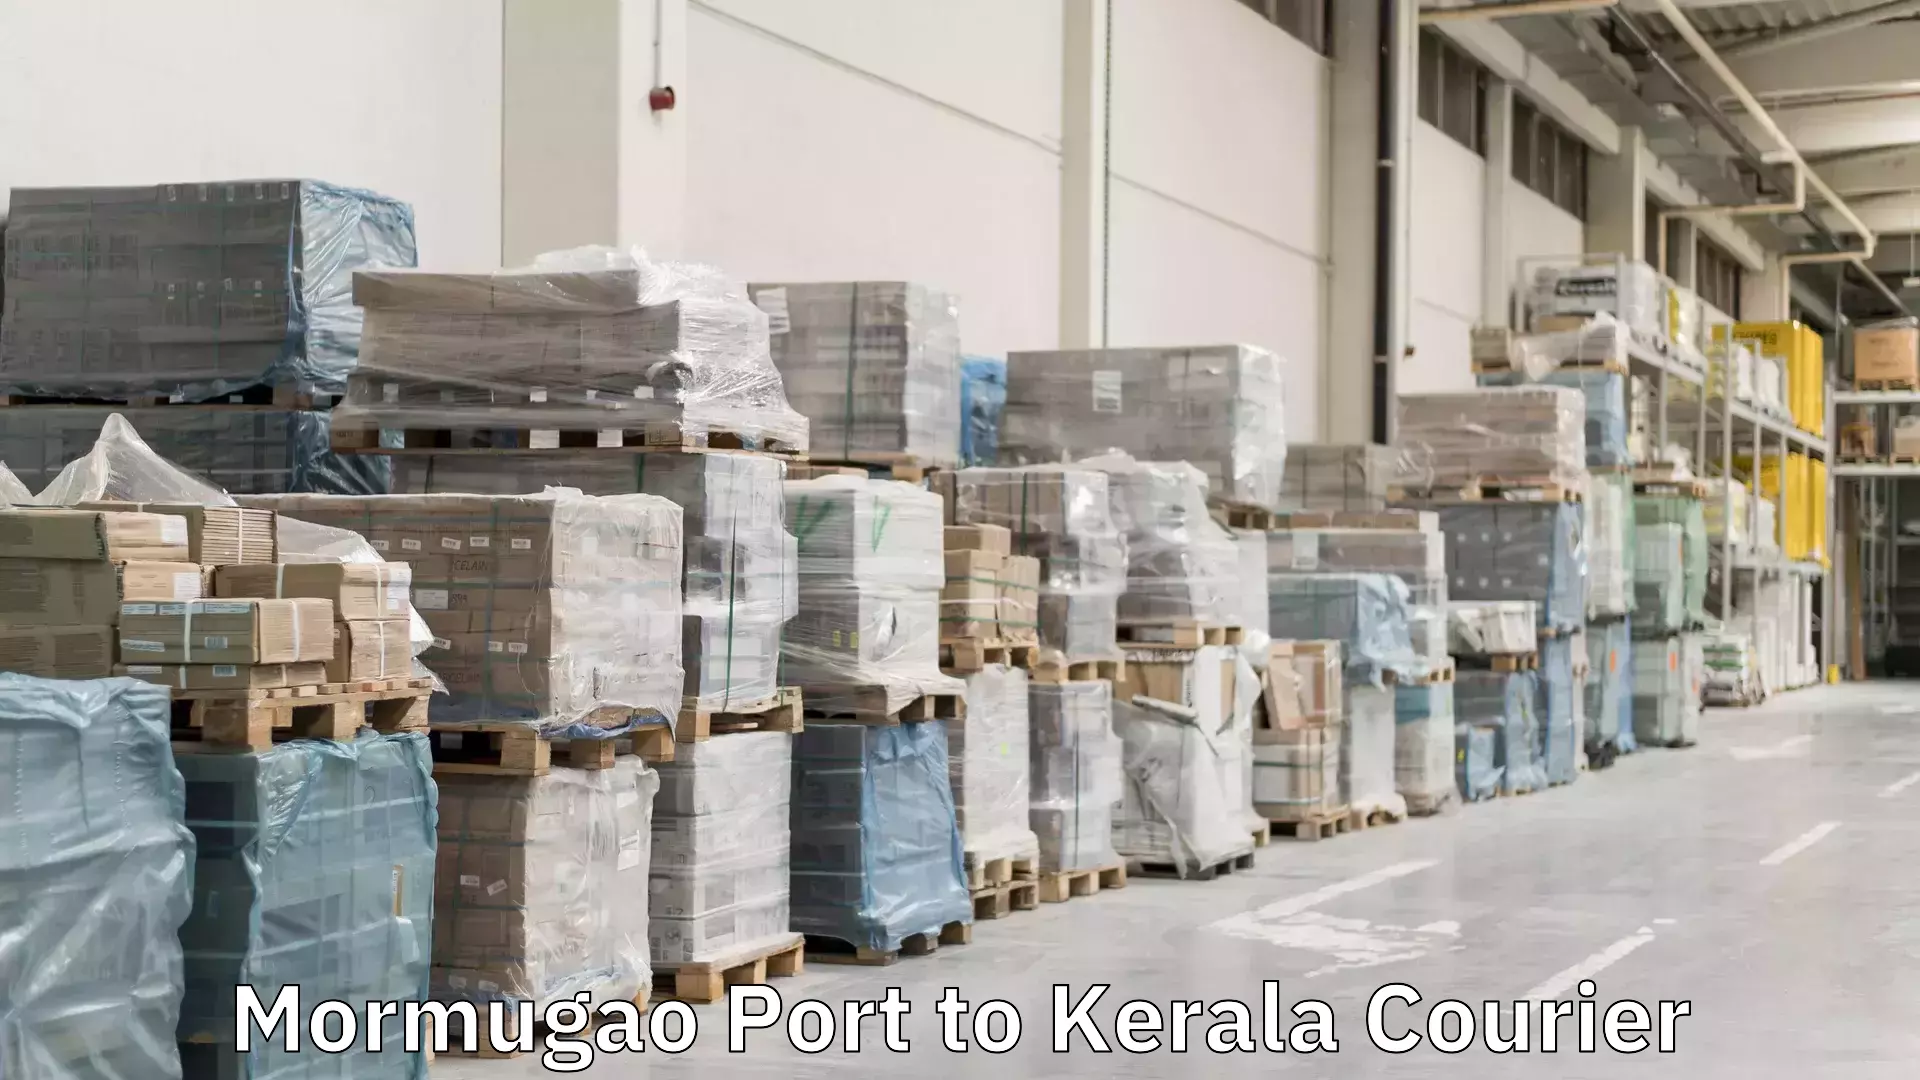 Courier service comparison Mormugao Port to Kerala